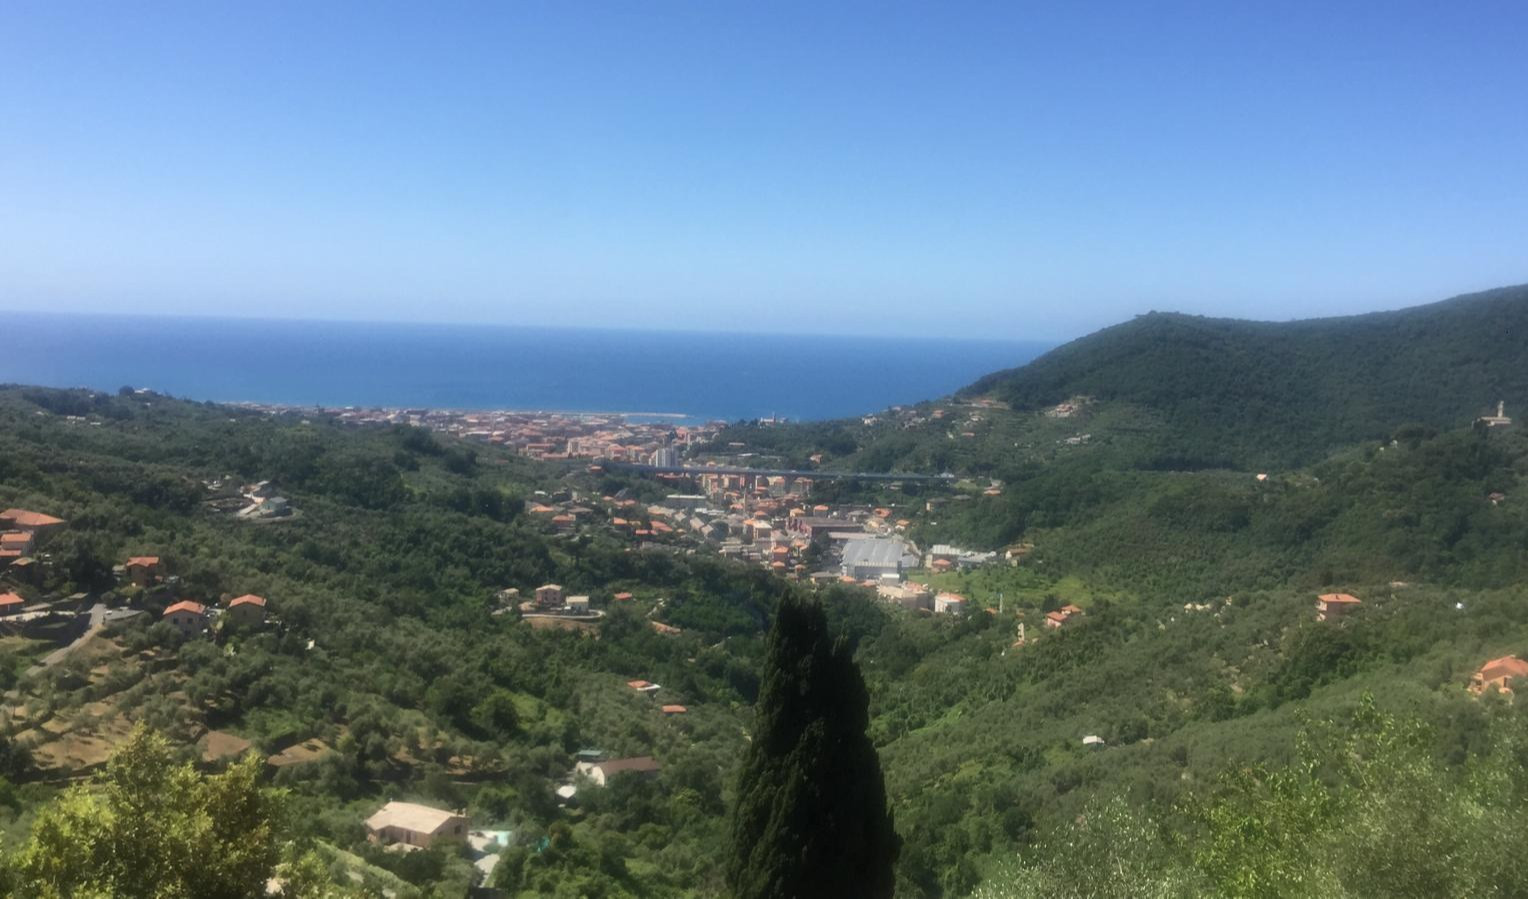 Meteo in Liguria, weekend di sole e caldo: le previsioni